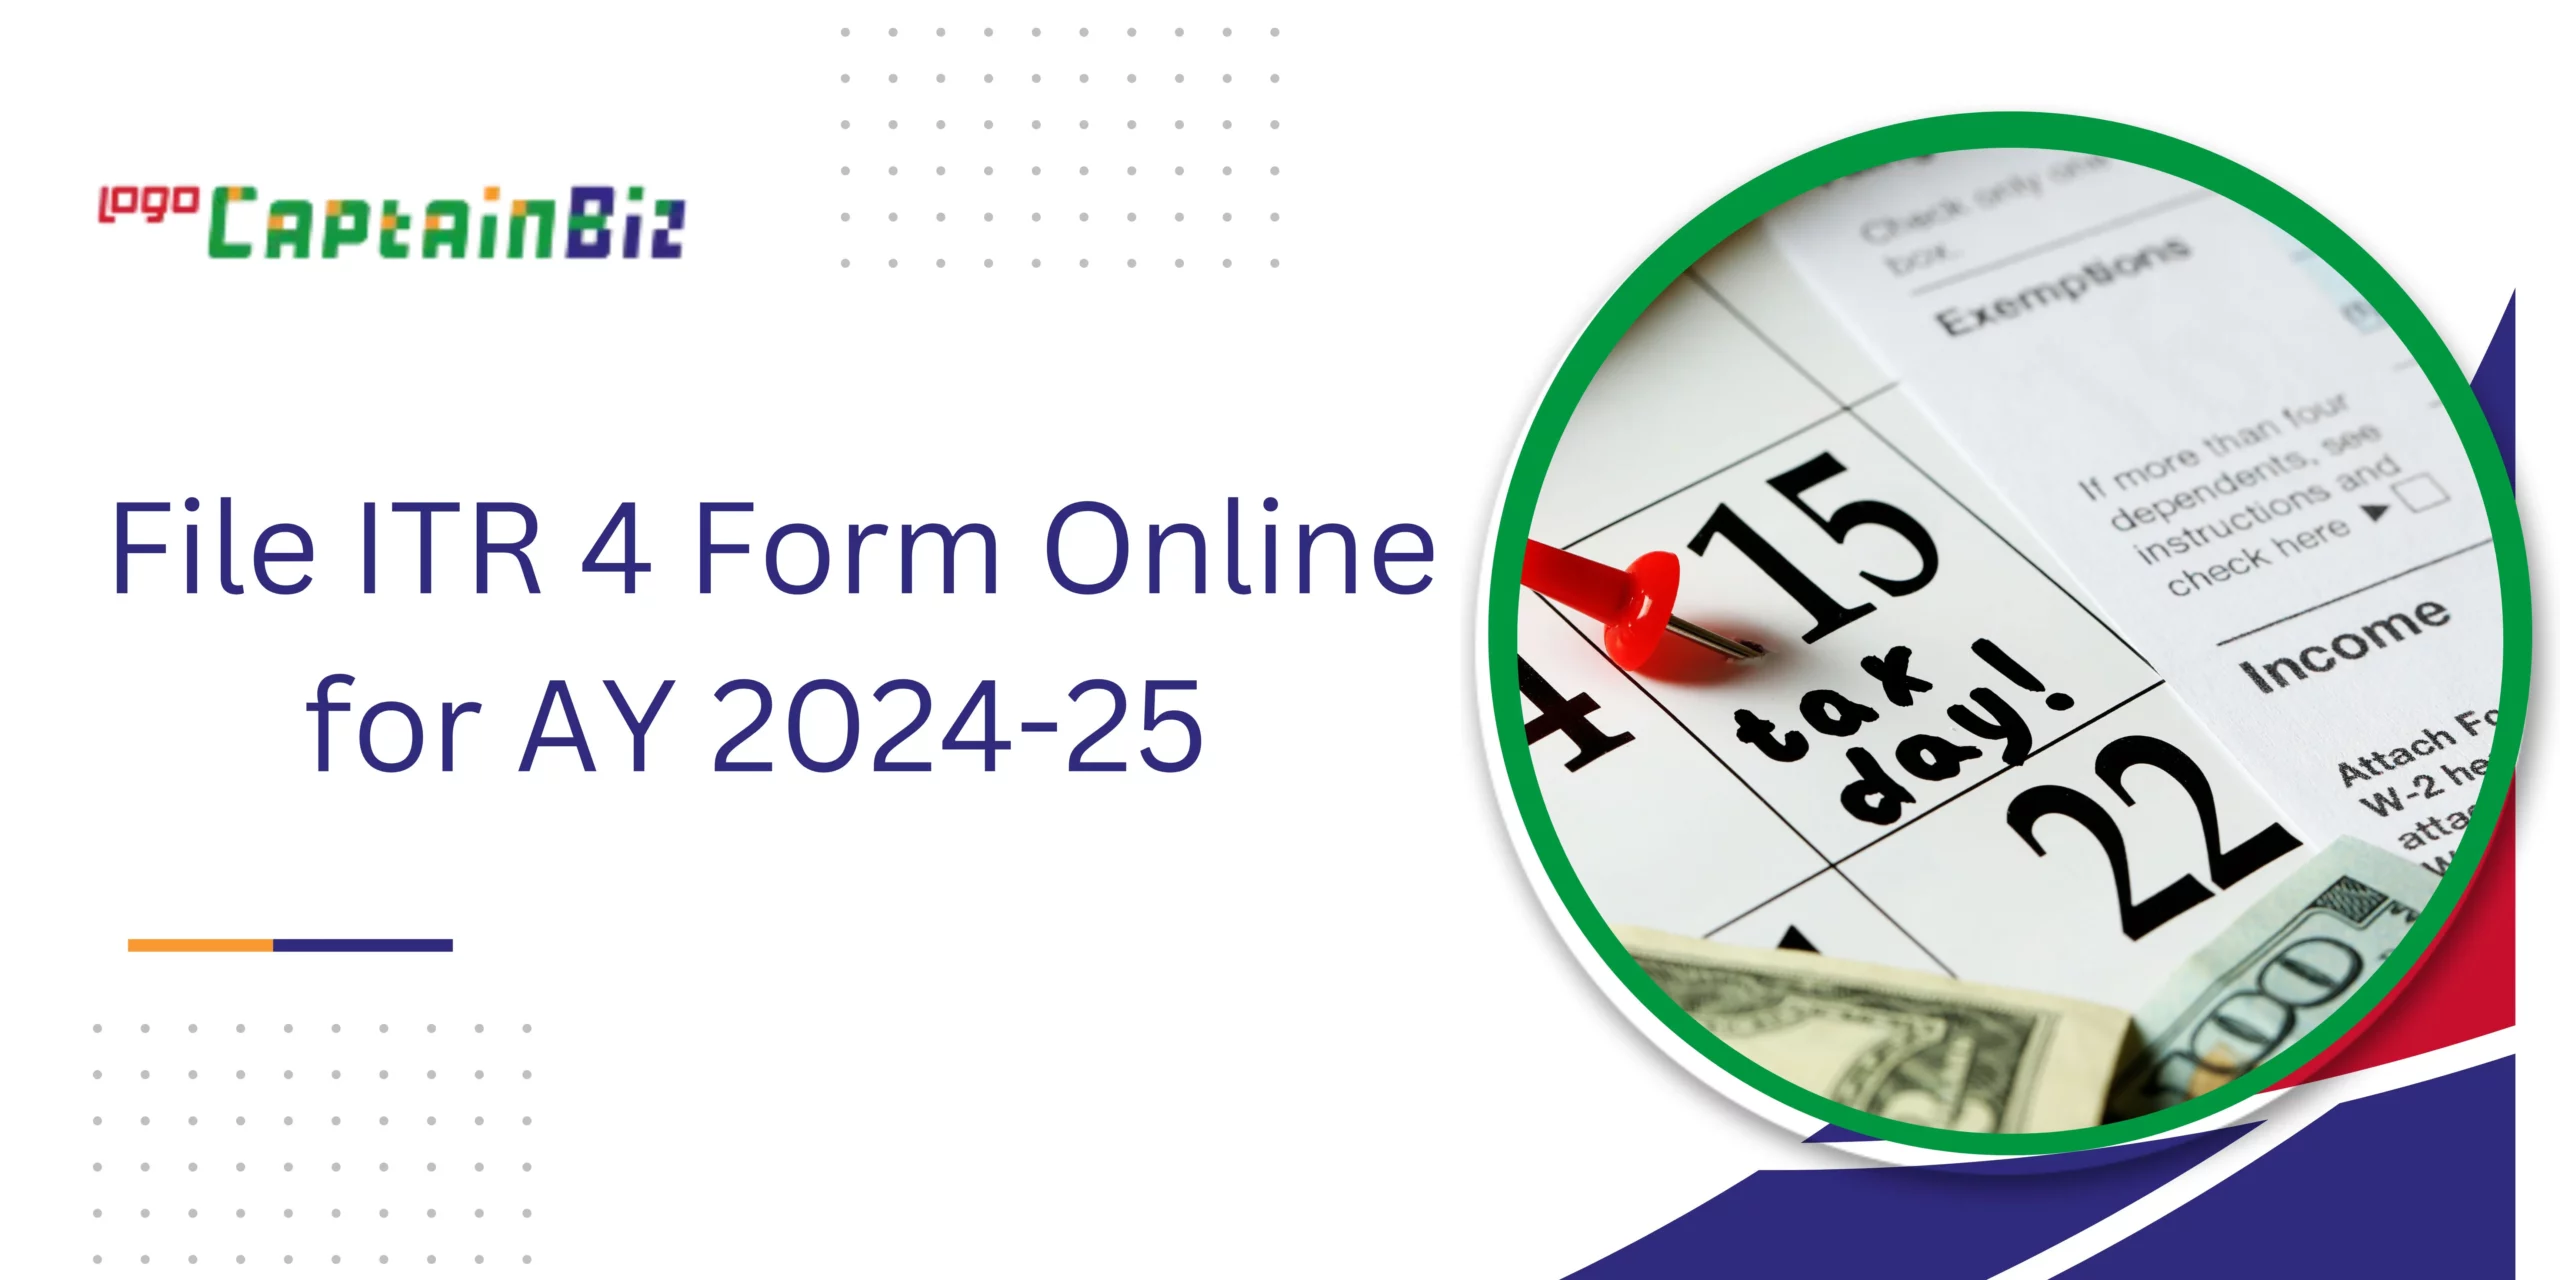 CaptainBiz: File ITR 4 Form Online for AY 2024-25